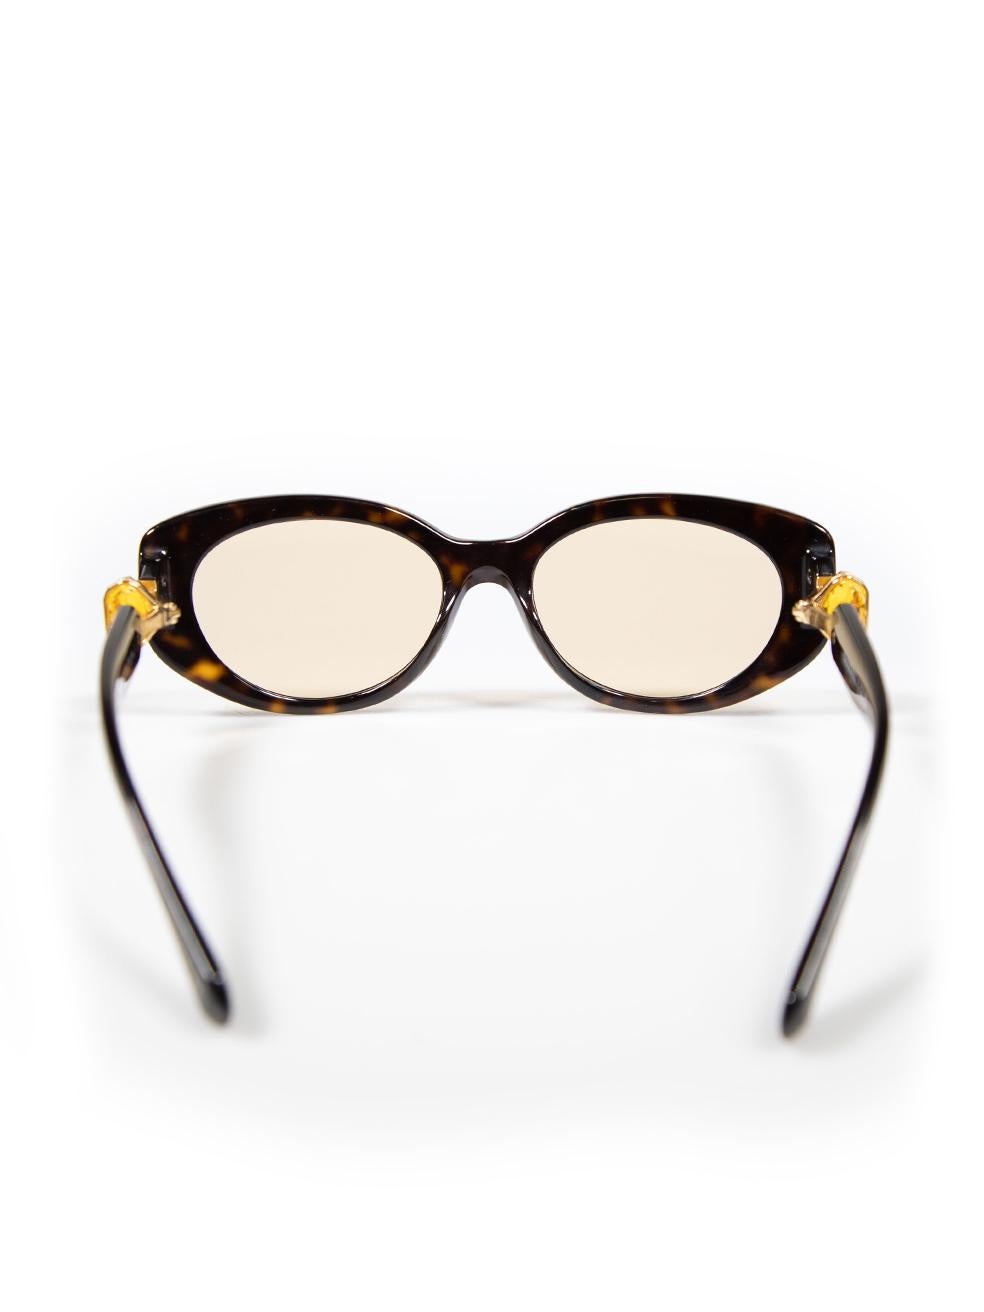 Swarovski Dark Havana SK 6002 Oval Sunglasses In Excellent Condition For Sale In London, GB